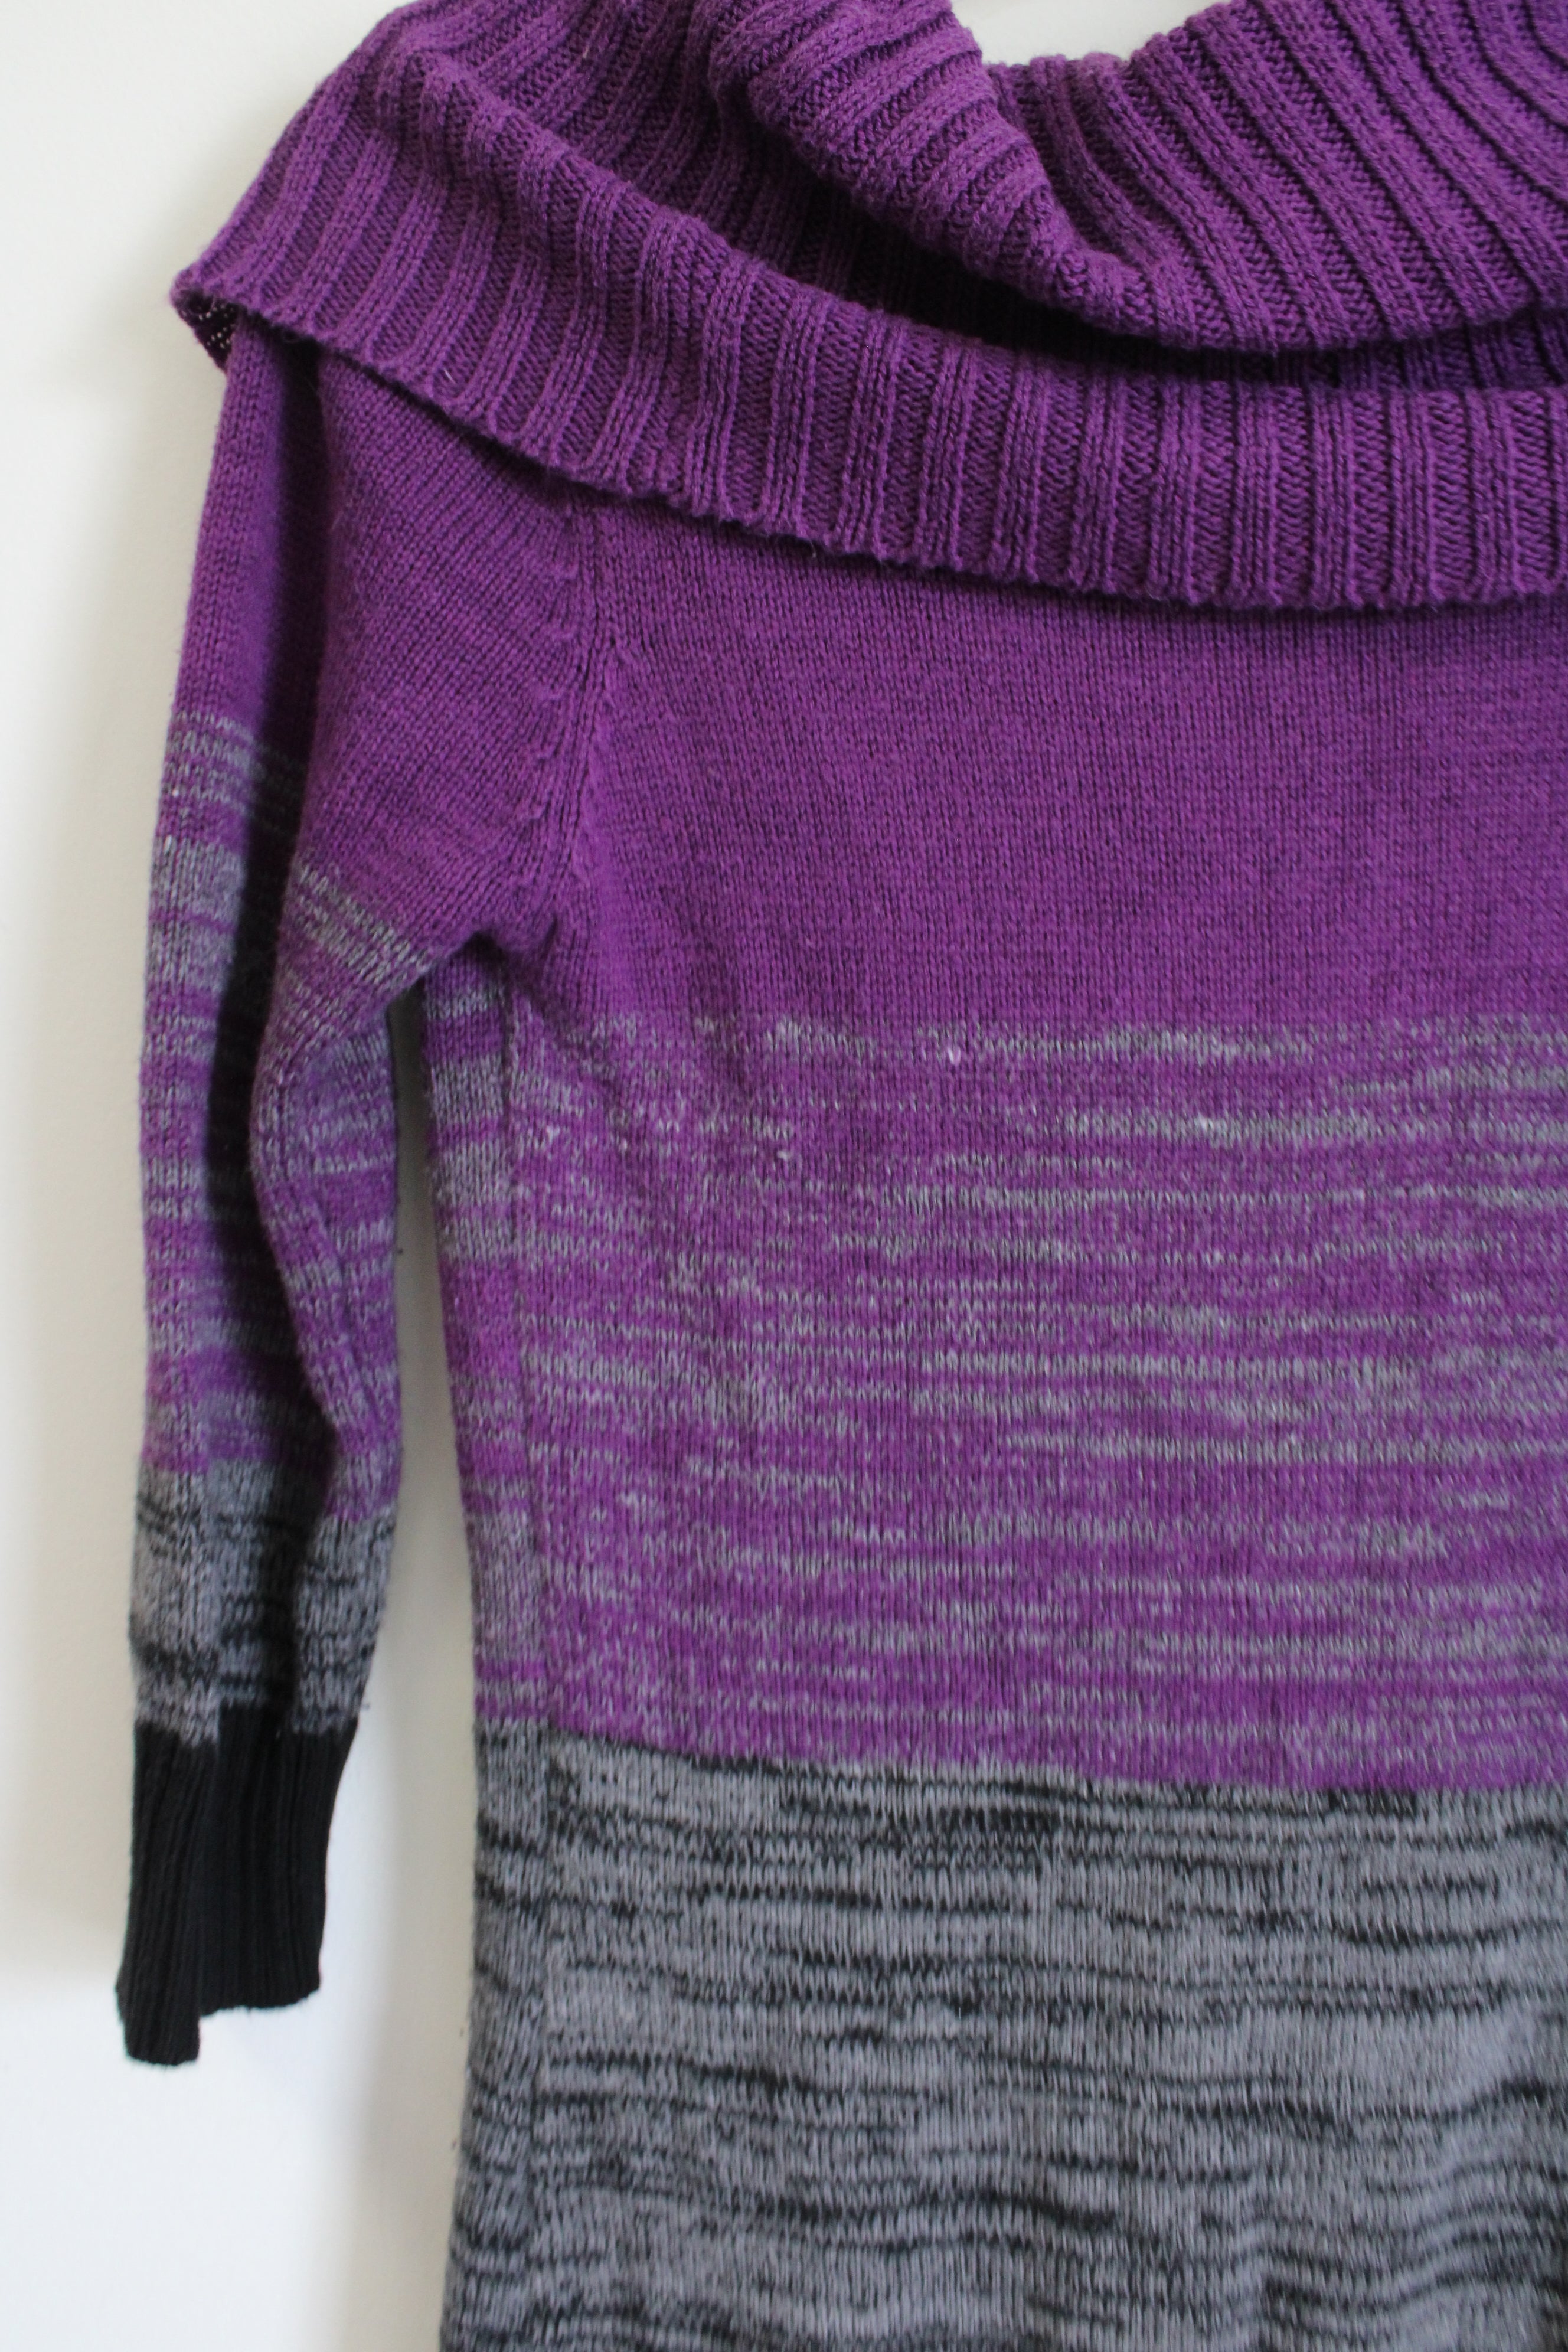 My Michelle Purple & Black Cowl Neck Sweater Dress | Youth M